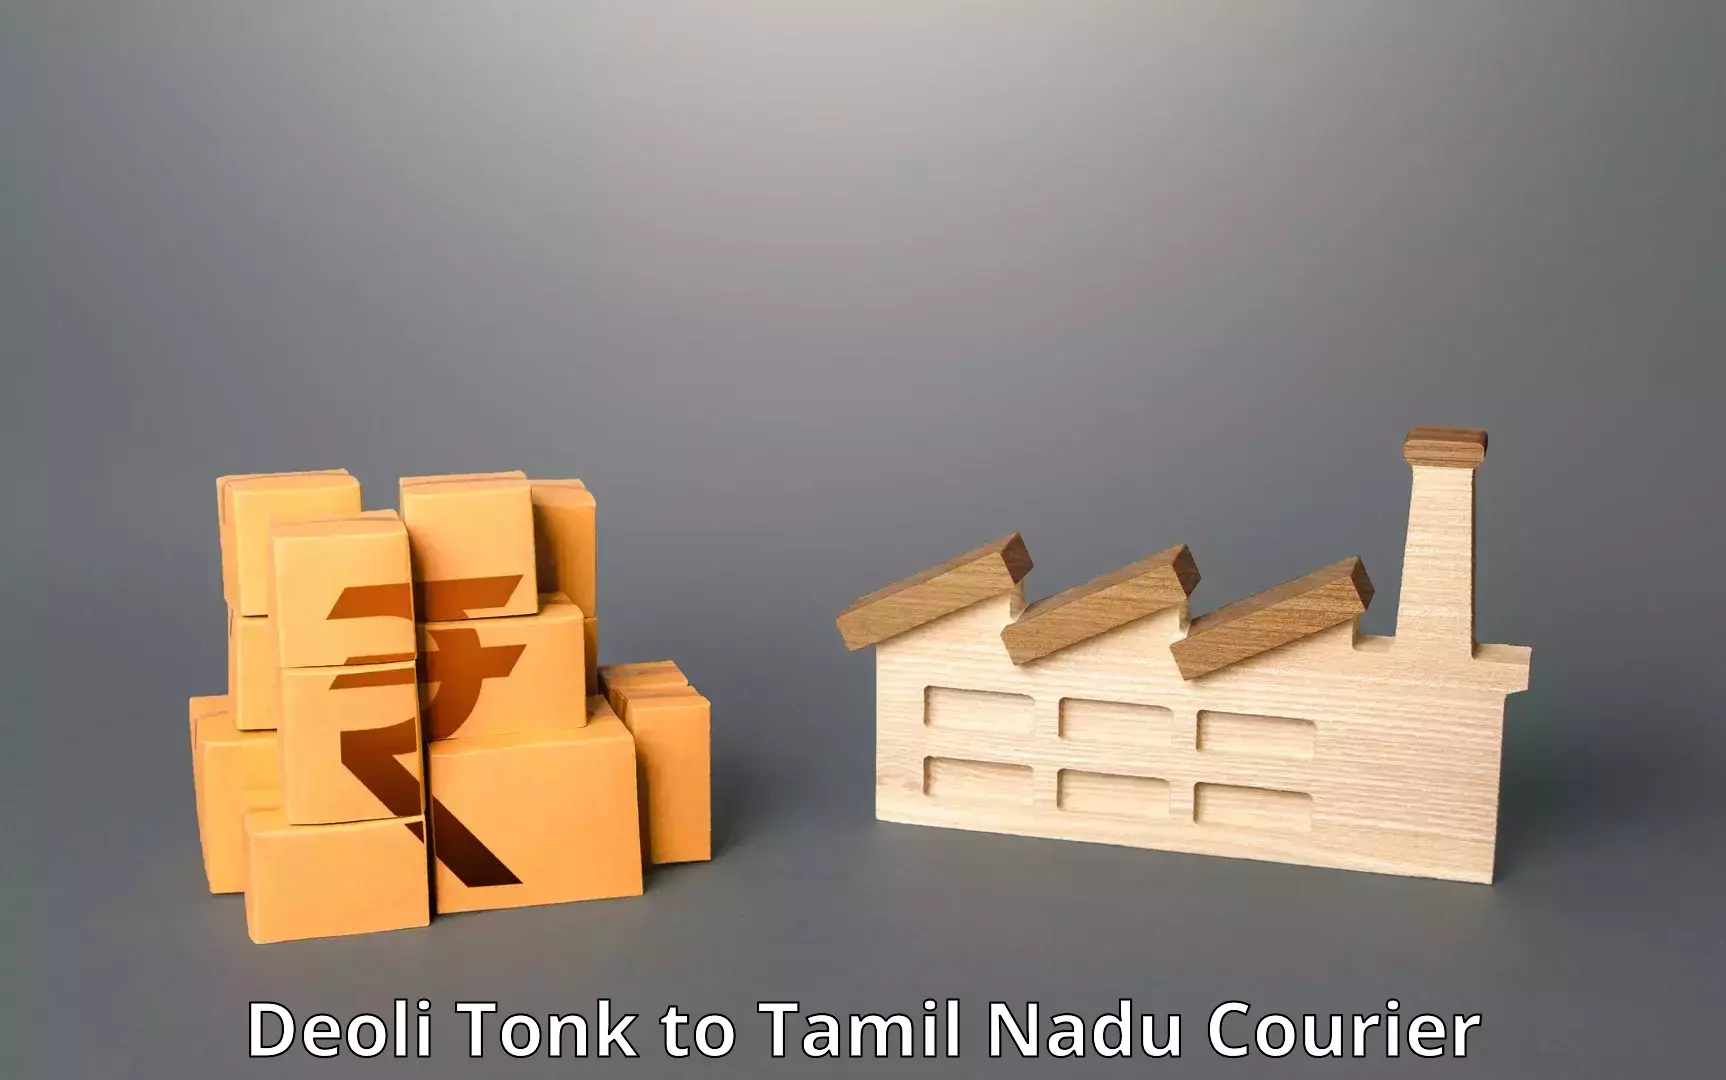 Nationwide shipping capabilities Deoli Tonk to Tamil Nadu